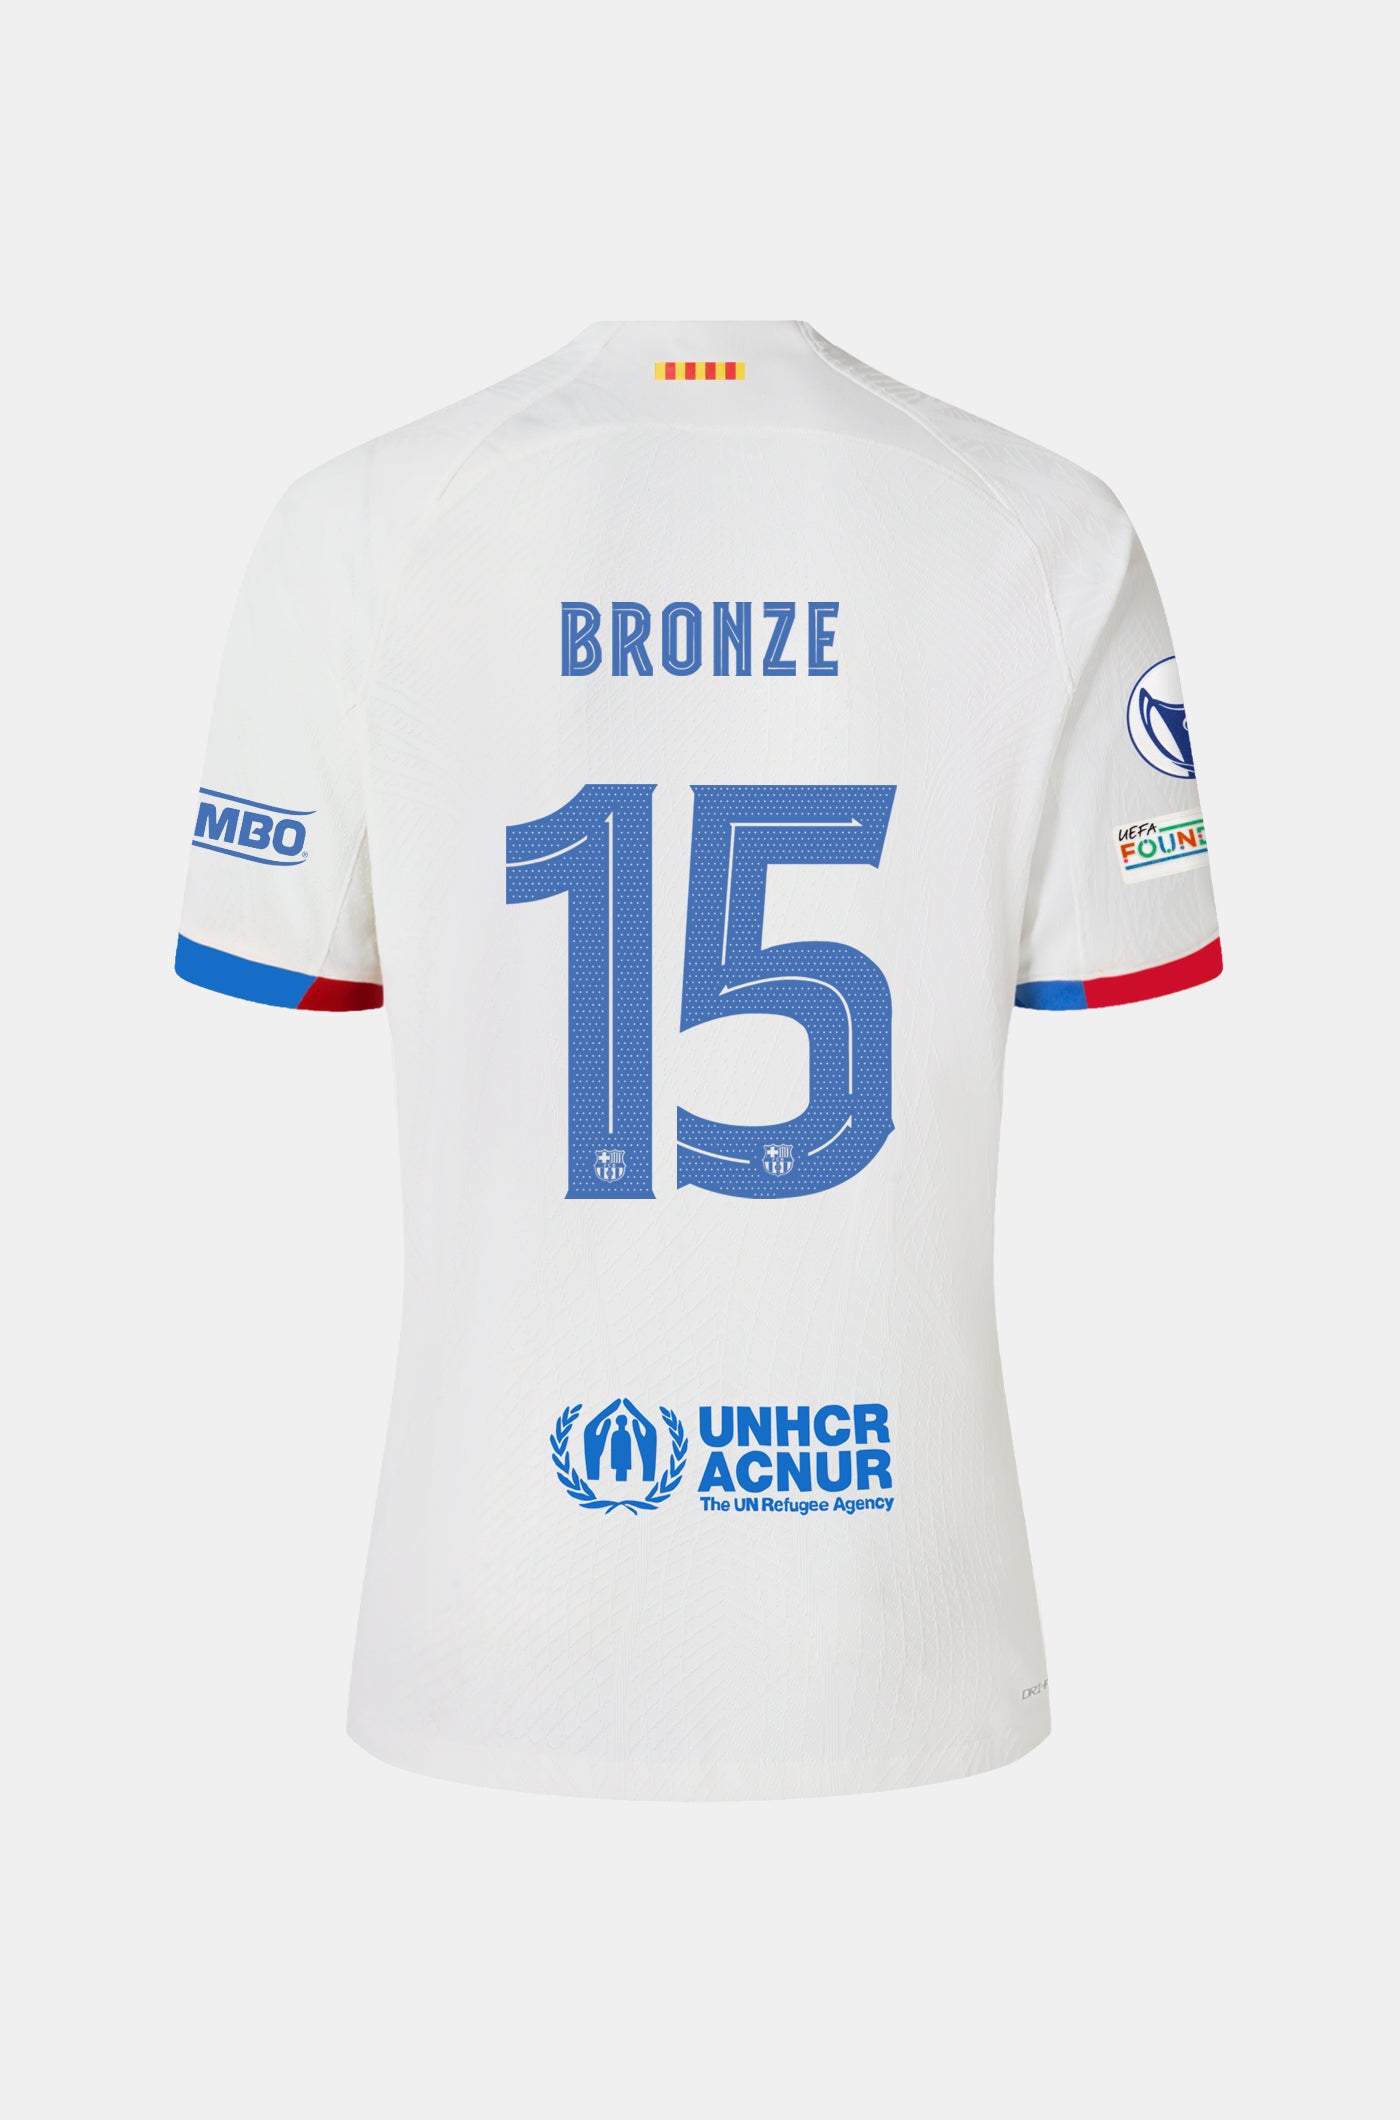 UWCL FC Barcelona Away Shirt 23/24 Player’s Edition - Women  - BRONZE